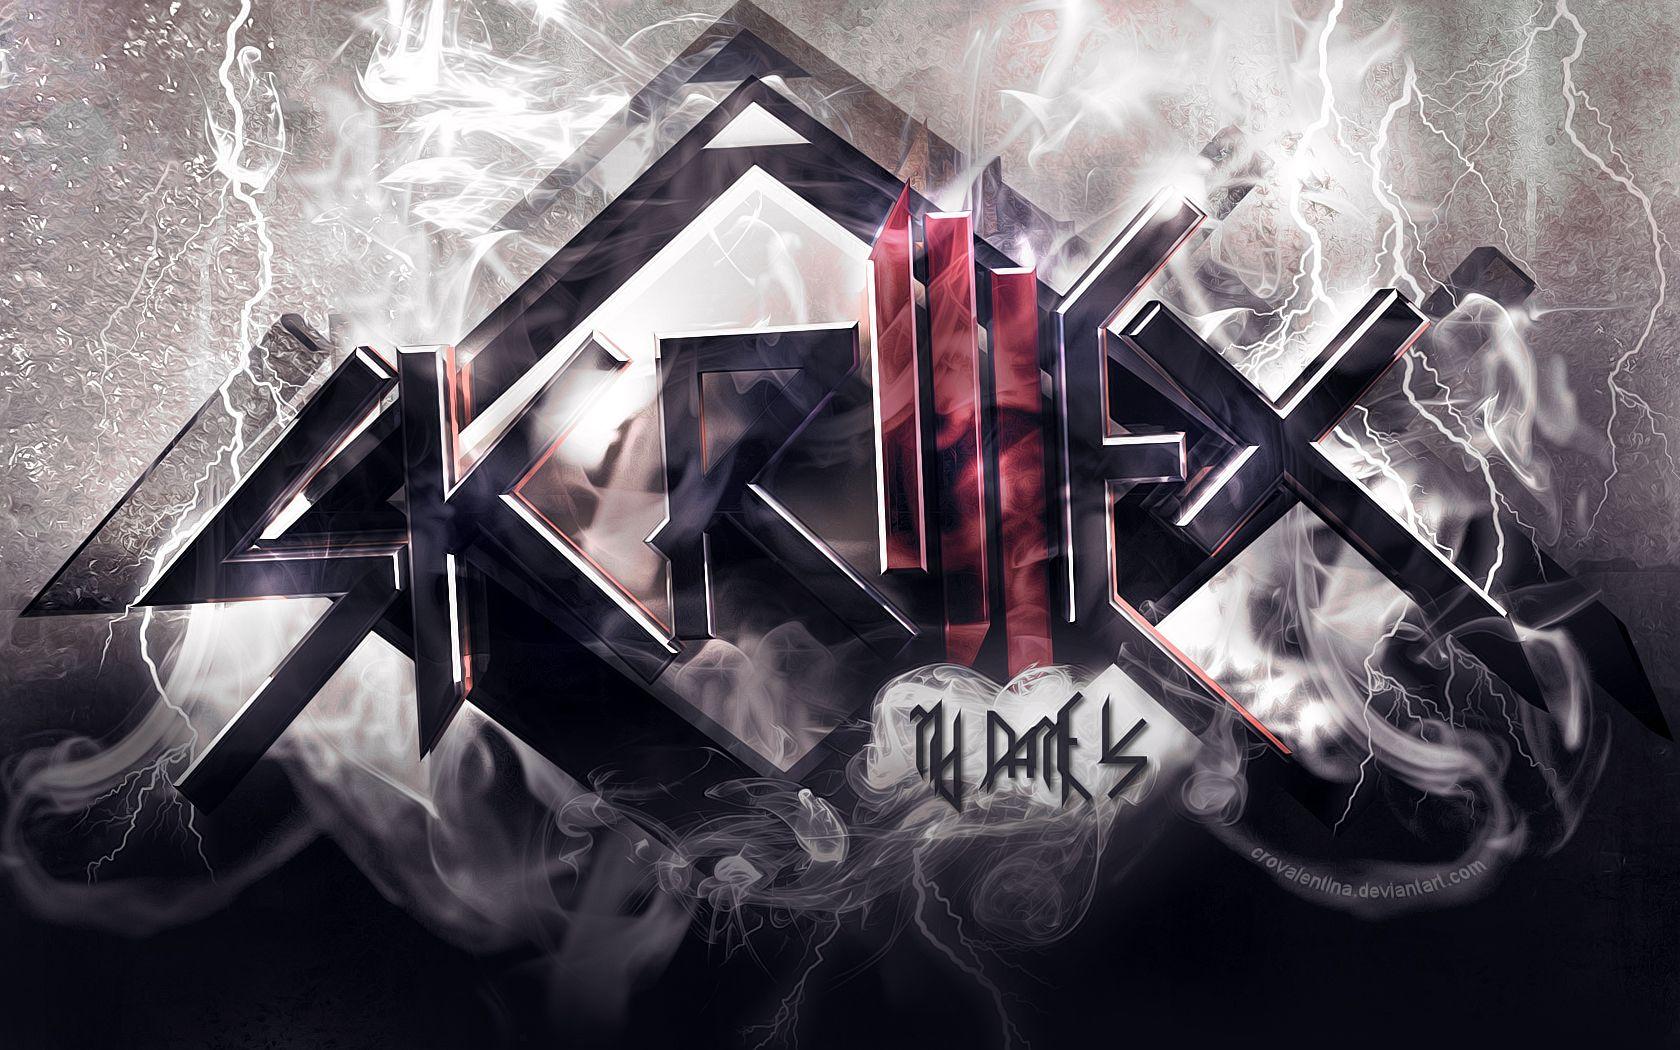 Skrillex image My Name Is SKRILLEX HD wallpaper and background